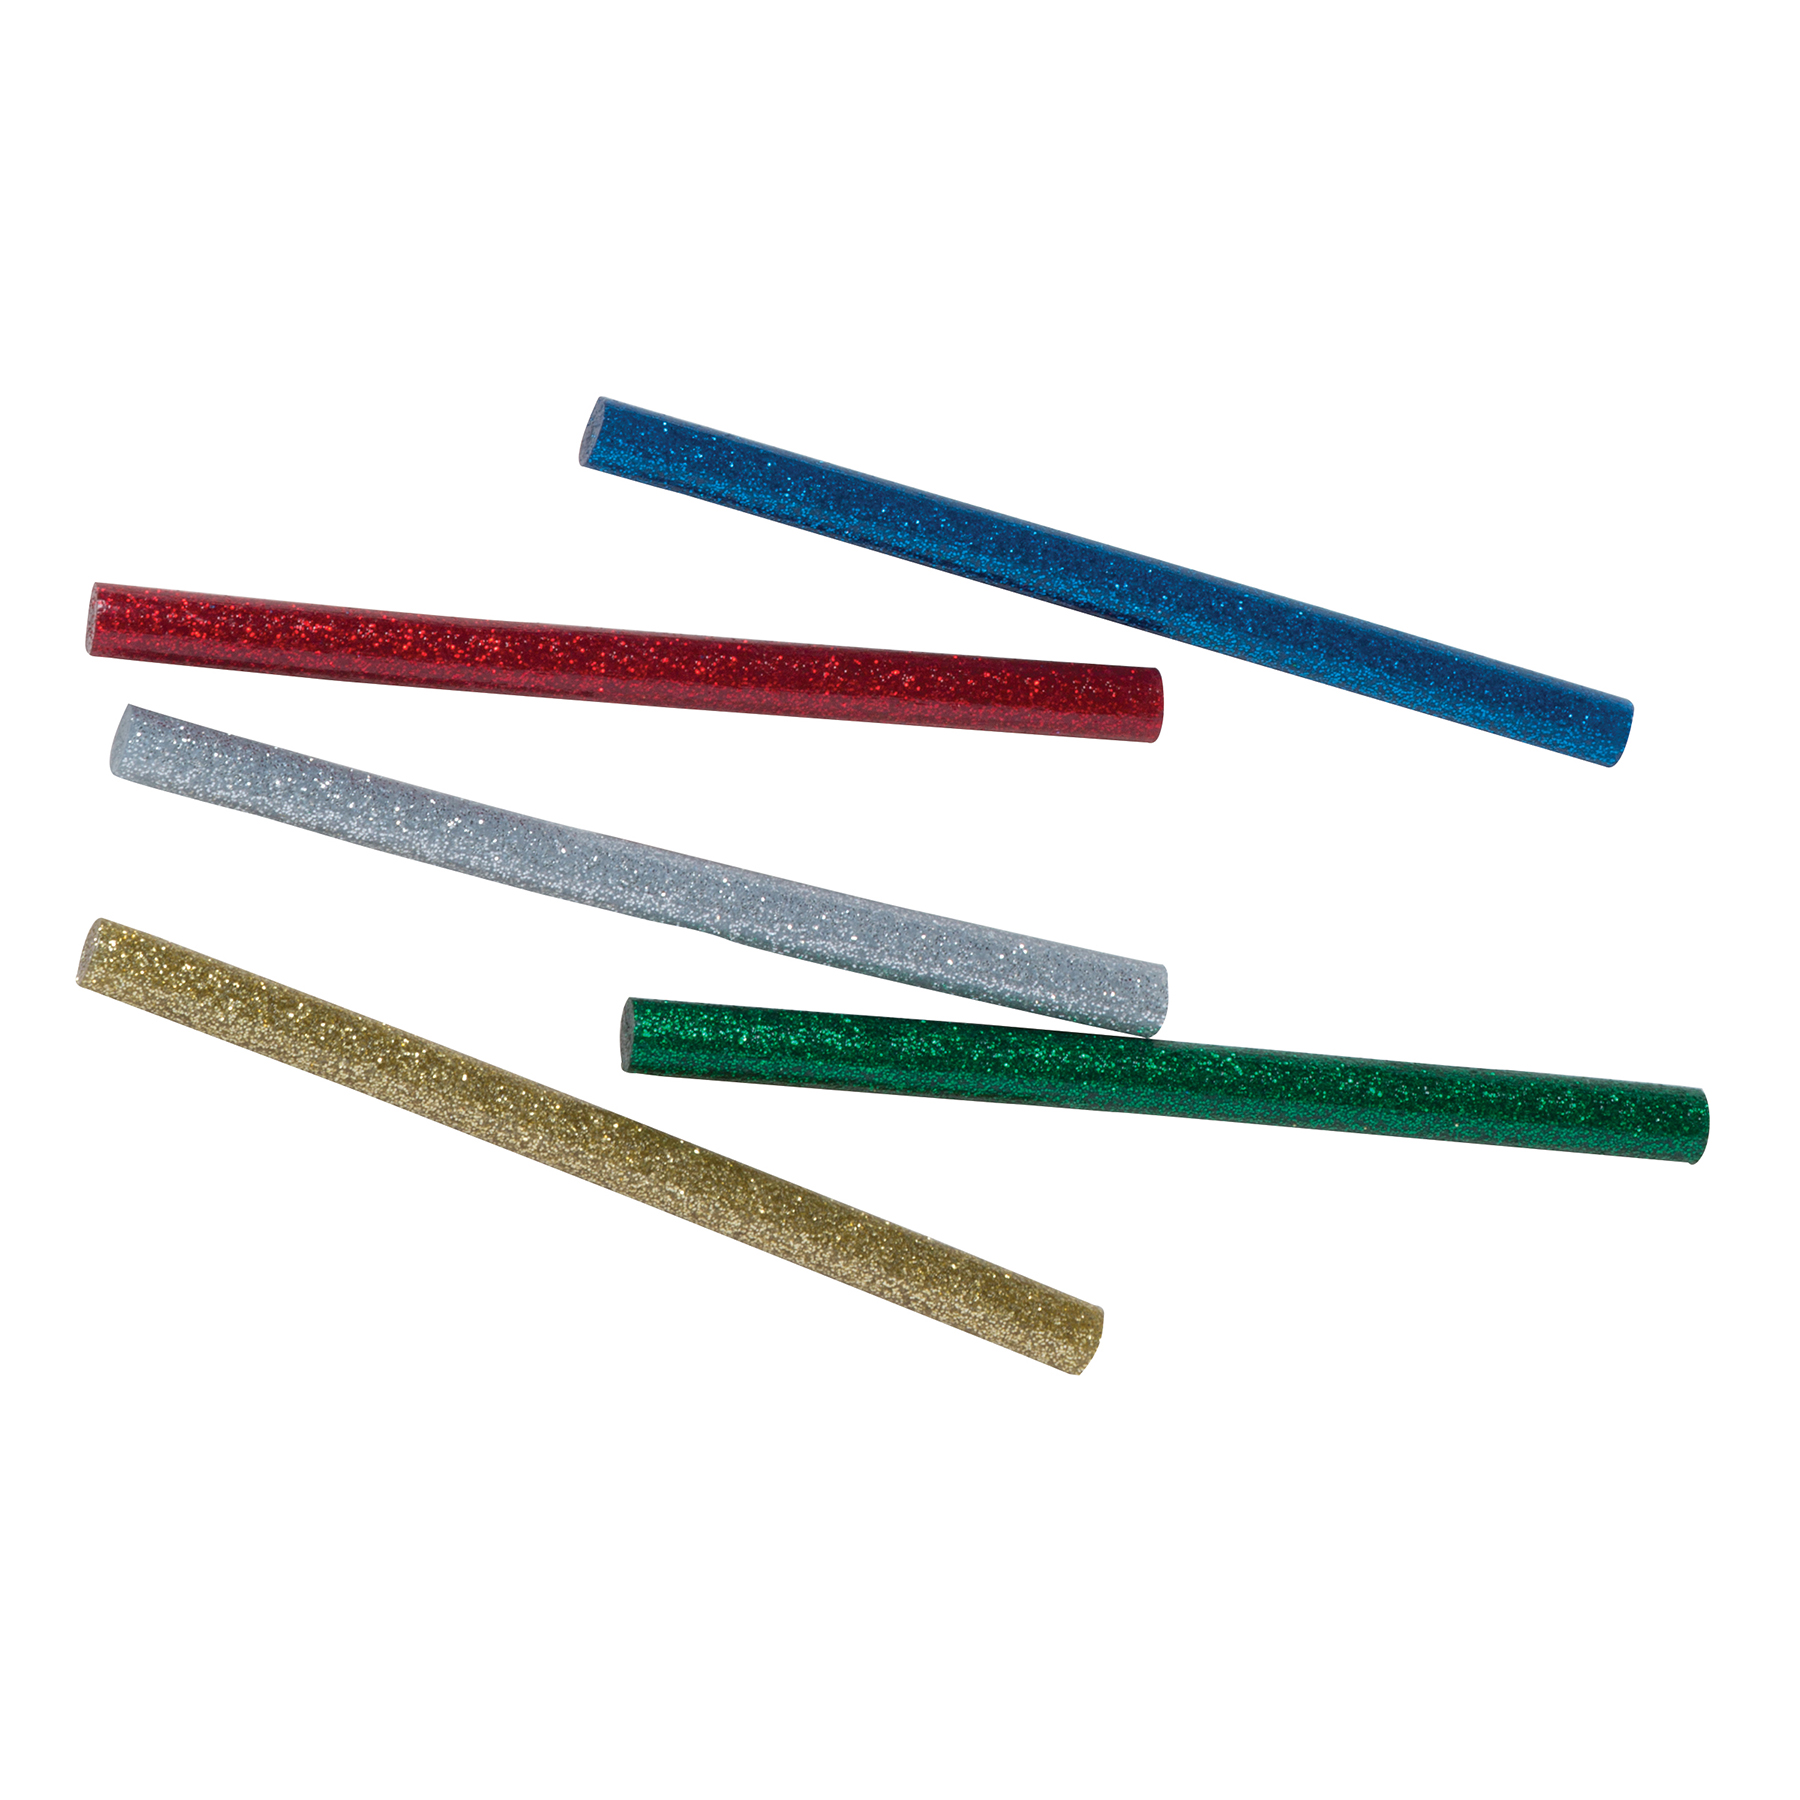 Hot Glue Sticks, Clear, 4 x 0.3125, 12 Pieces - CK-3351, Dixon  Ticonderoga Co - Pacon